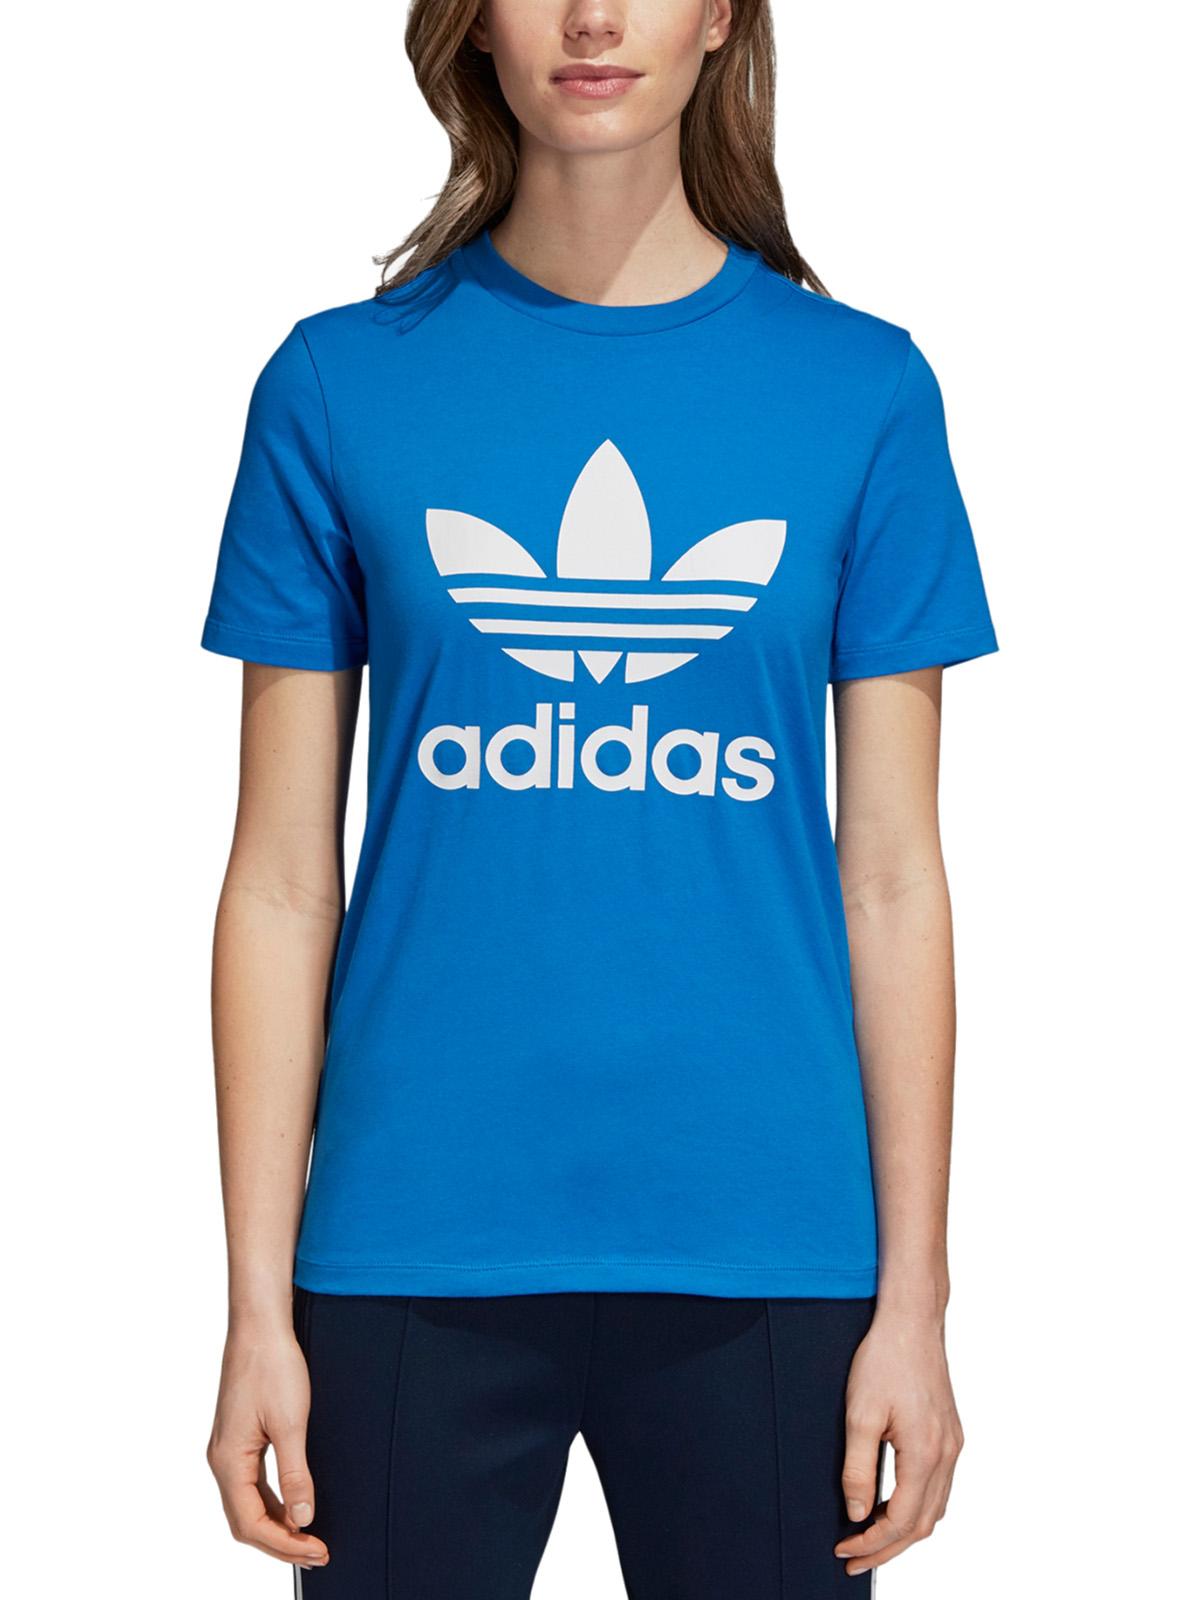 Adidas Womens Originals Trefoil Bird,Medium Adicolor T-Shirt,Blue